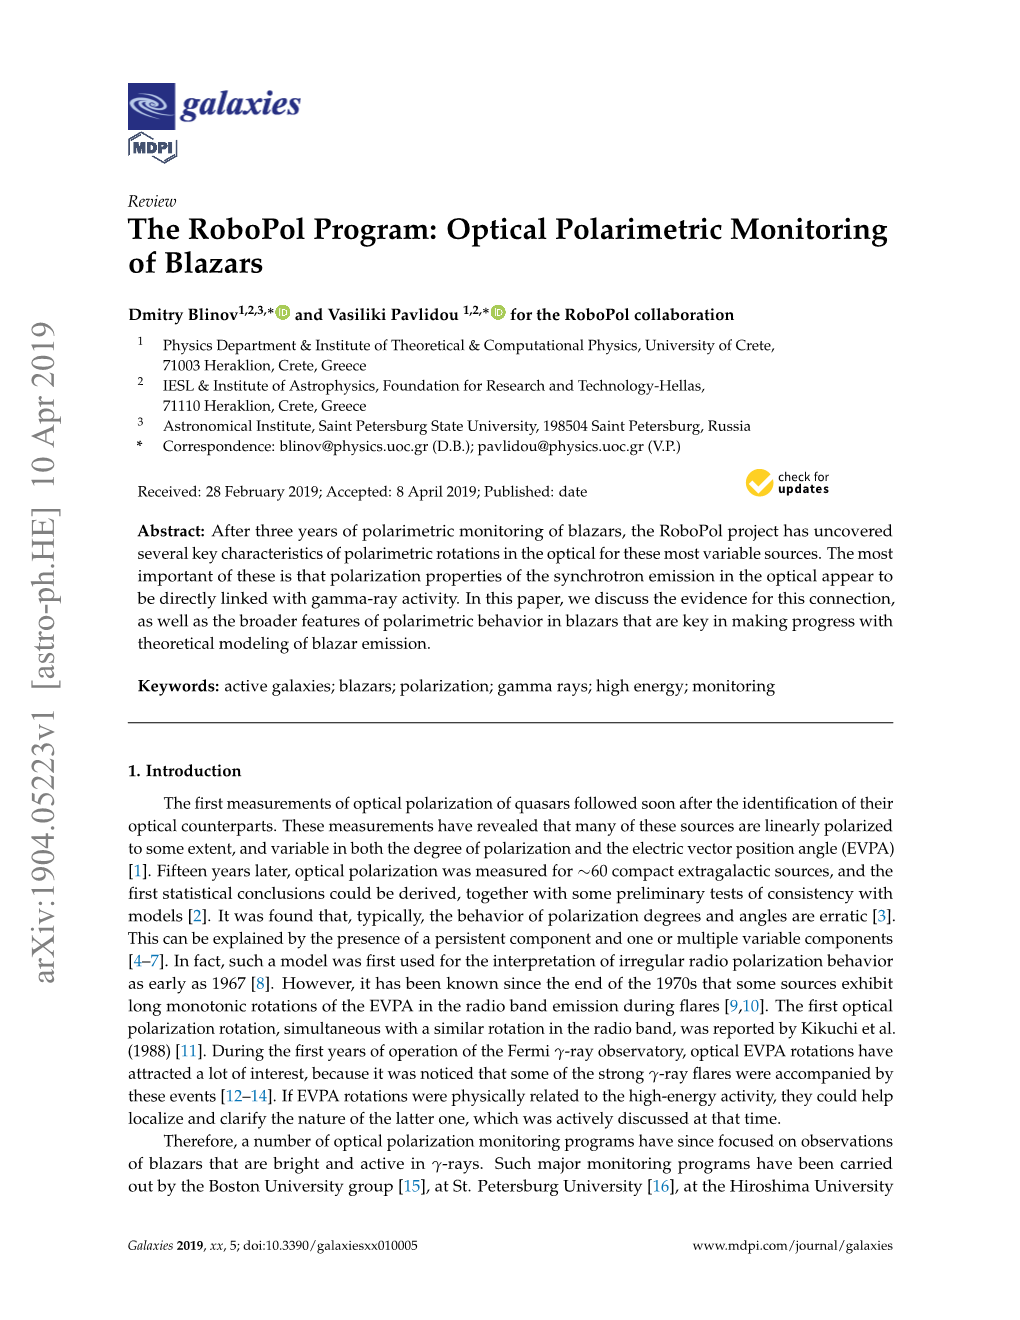 Optical Polarimetric Monitoring of Blazars